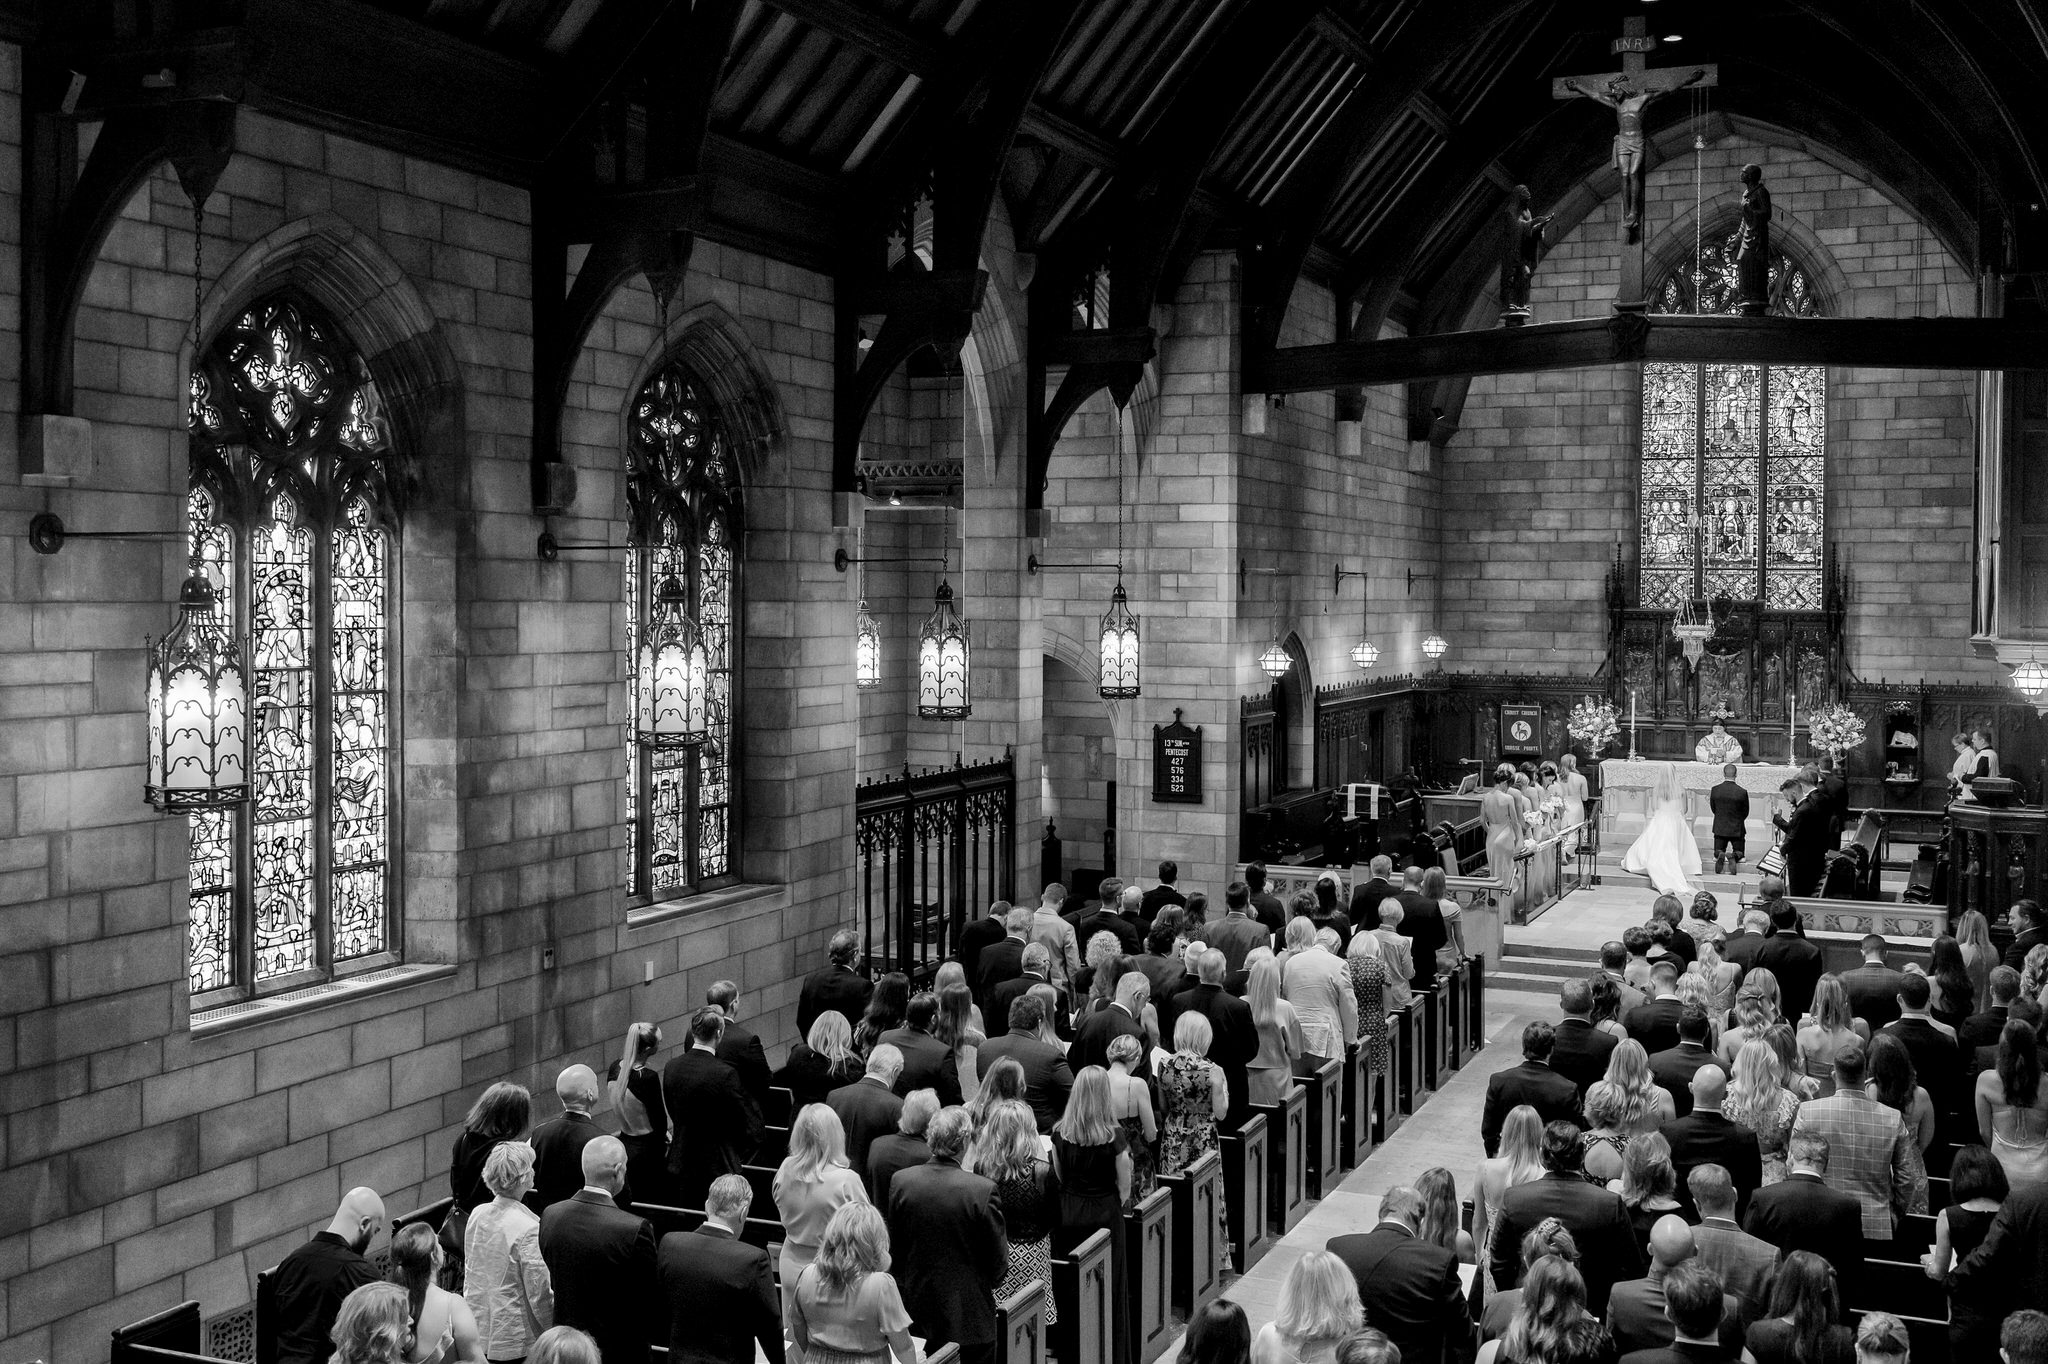 Christ Church Grosse Pointe wedding ceremony.  